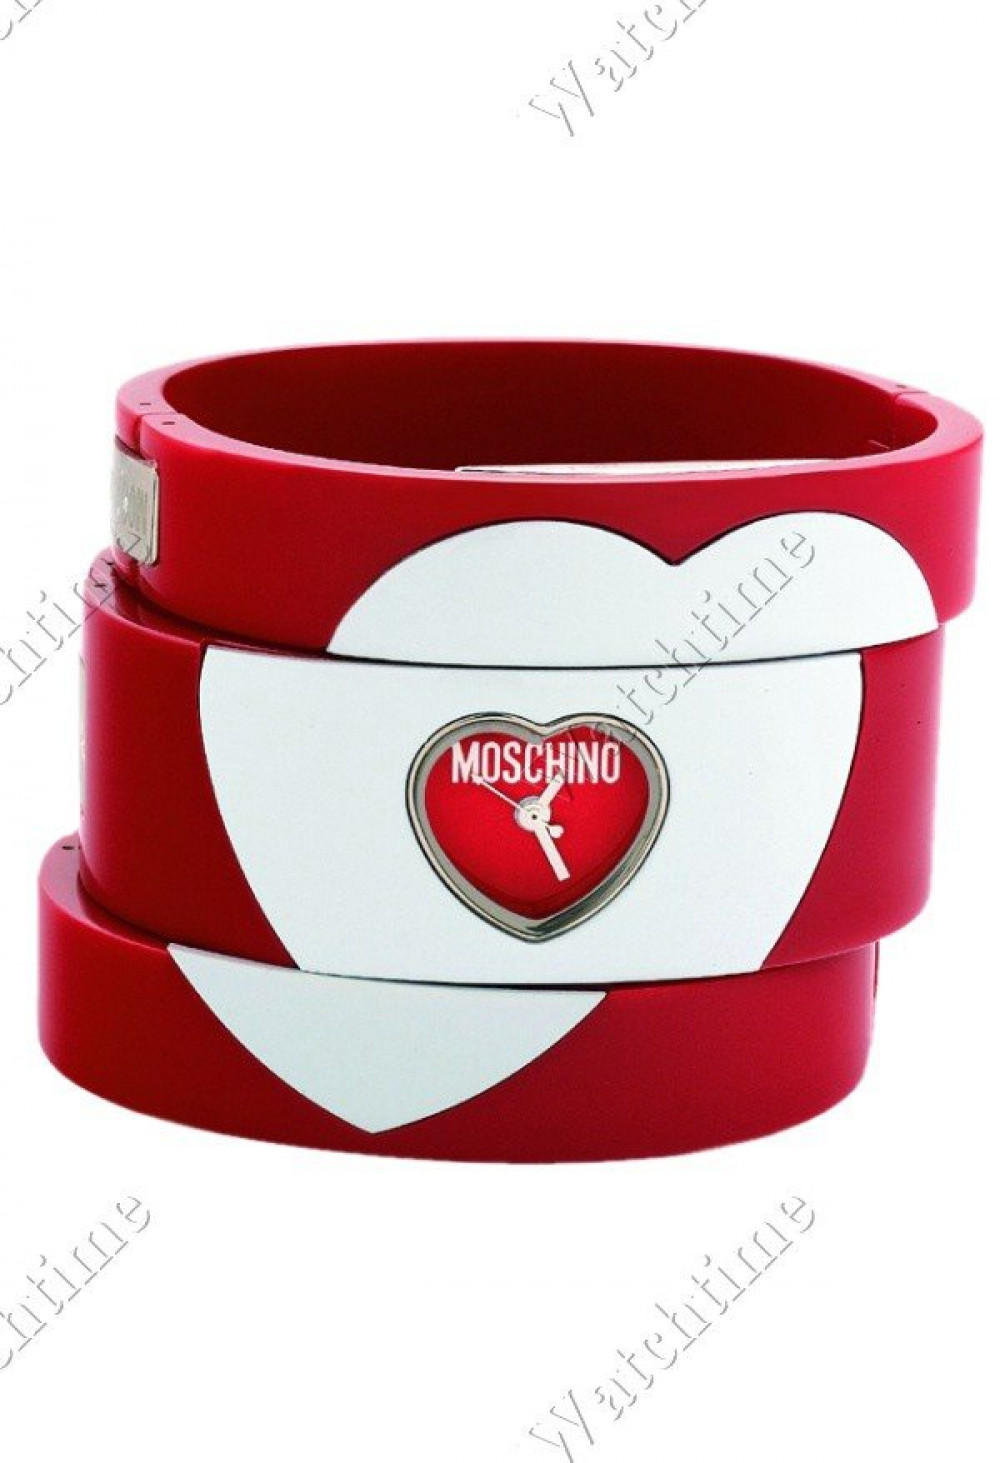 Zegarek firmy Moschino Hours & Minutes, model I Love Three